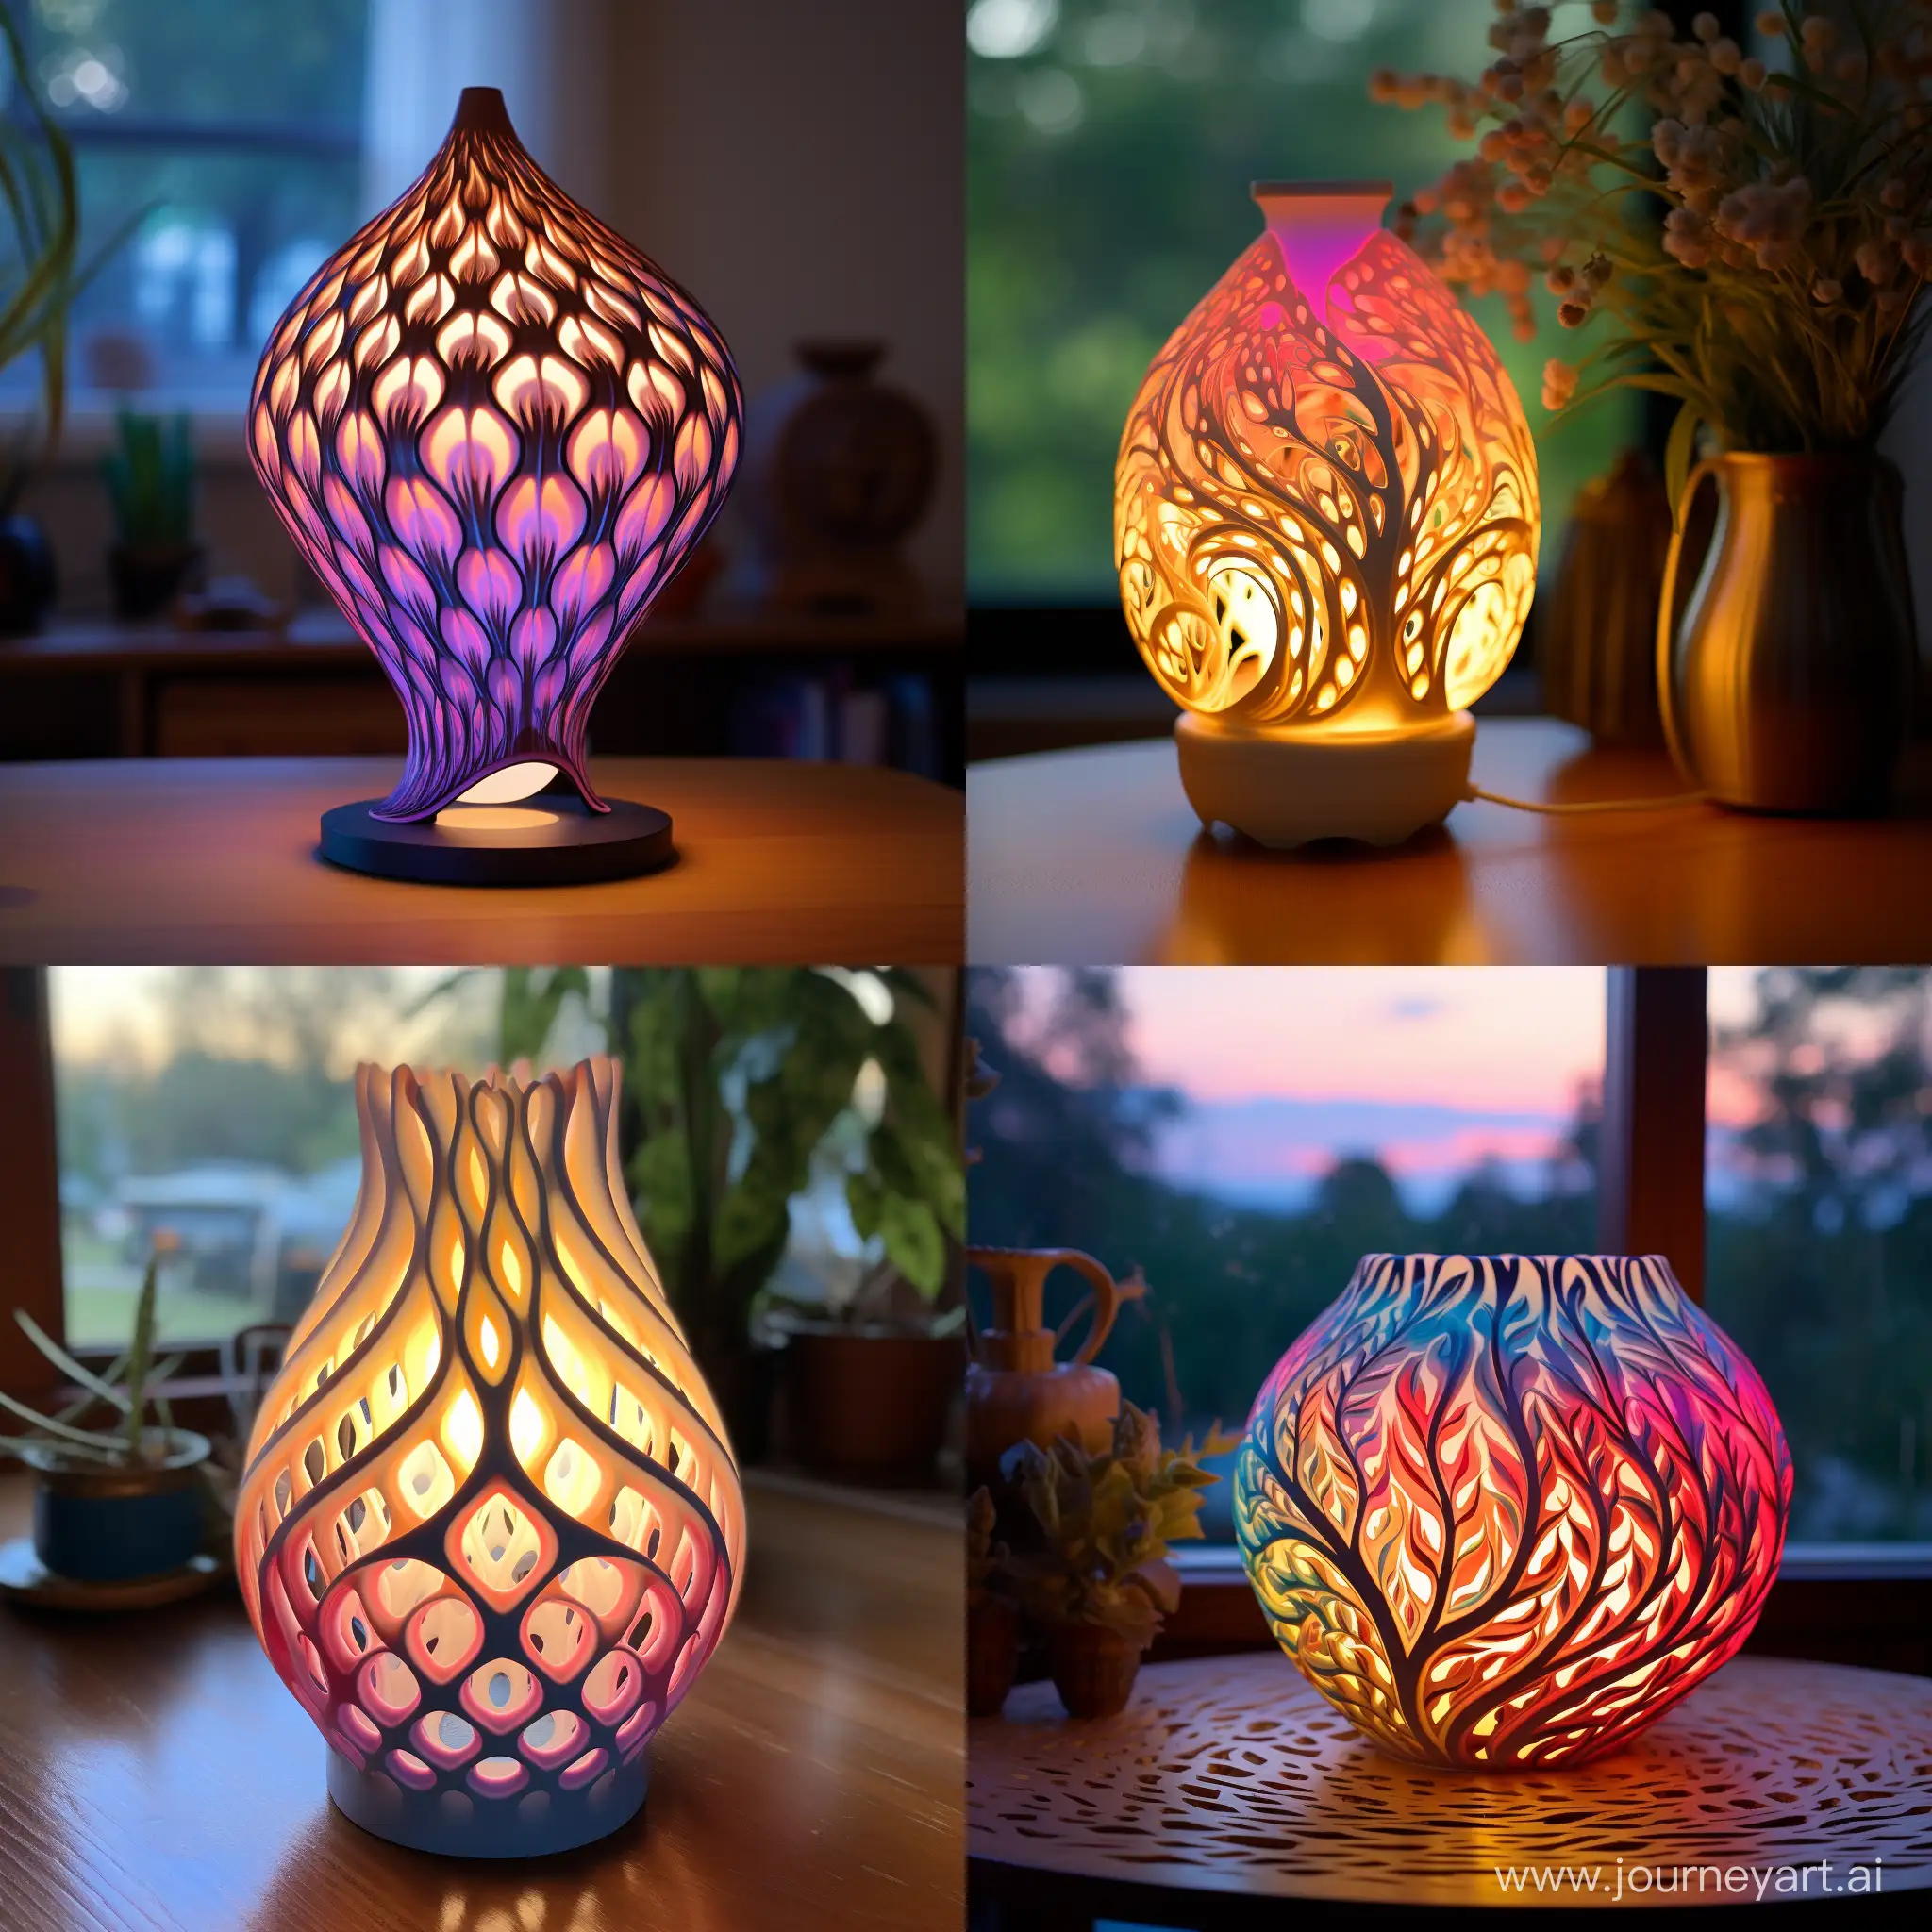 Mesmerizing-3D-Printed-Light-Lamp-with-Lush-Patterns